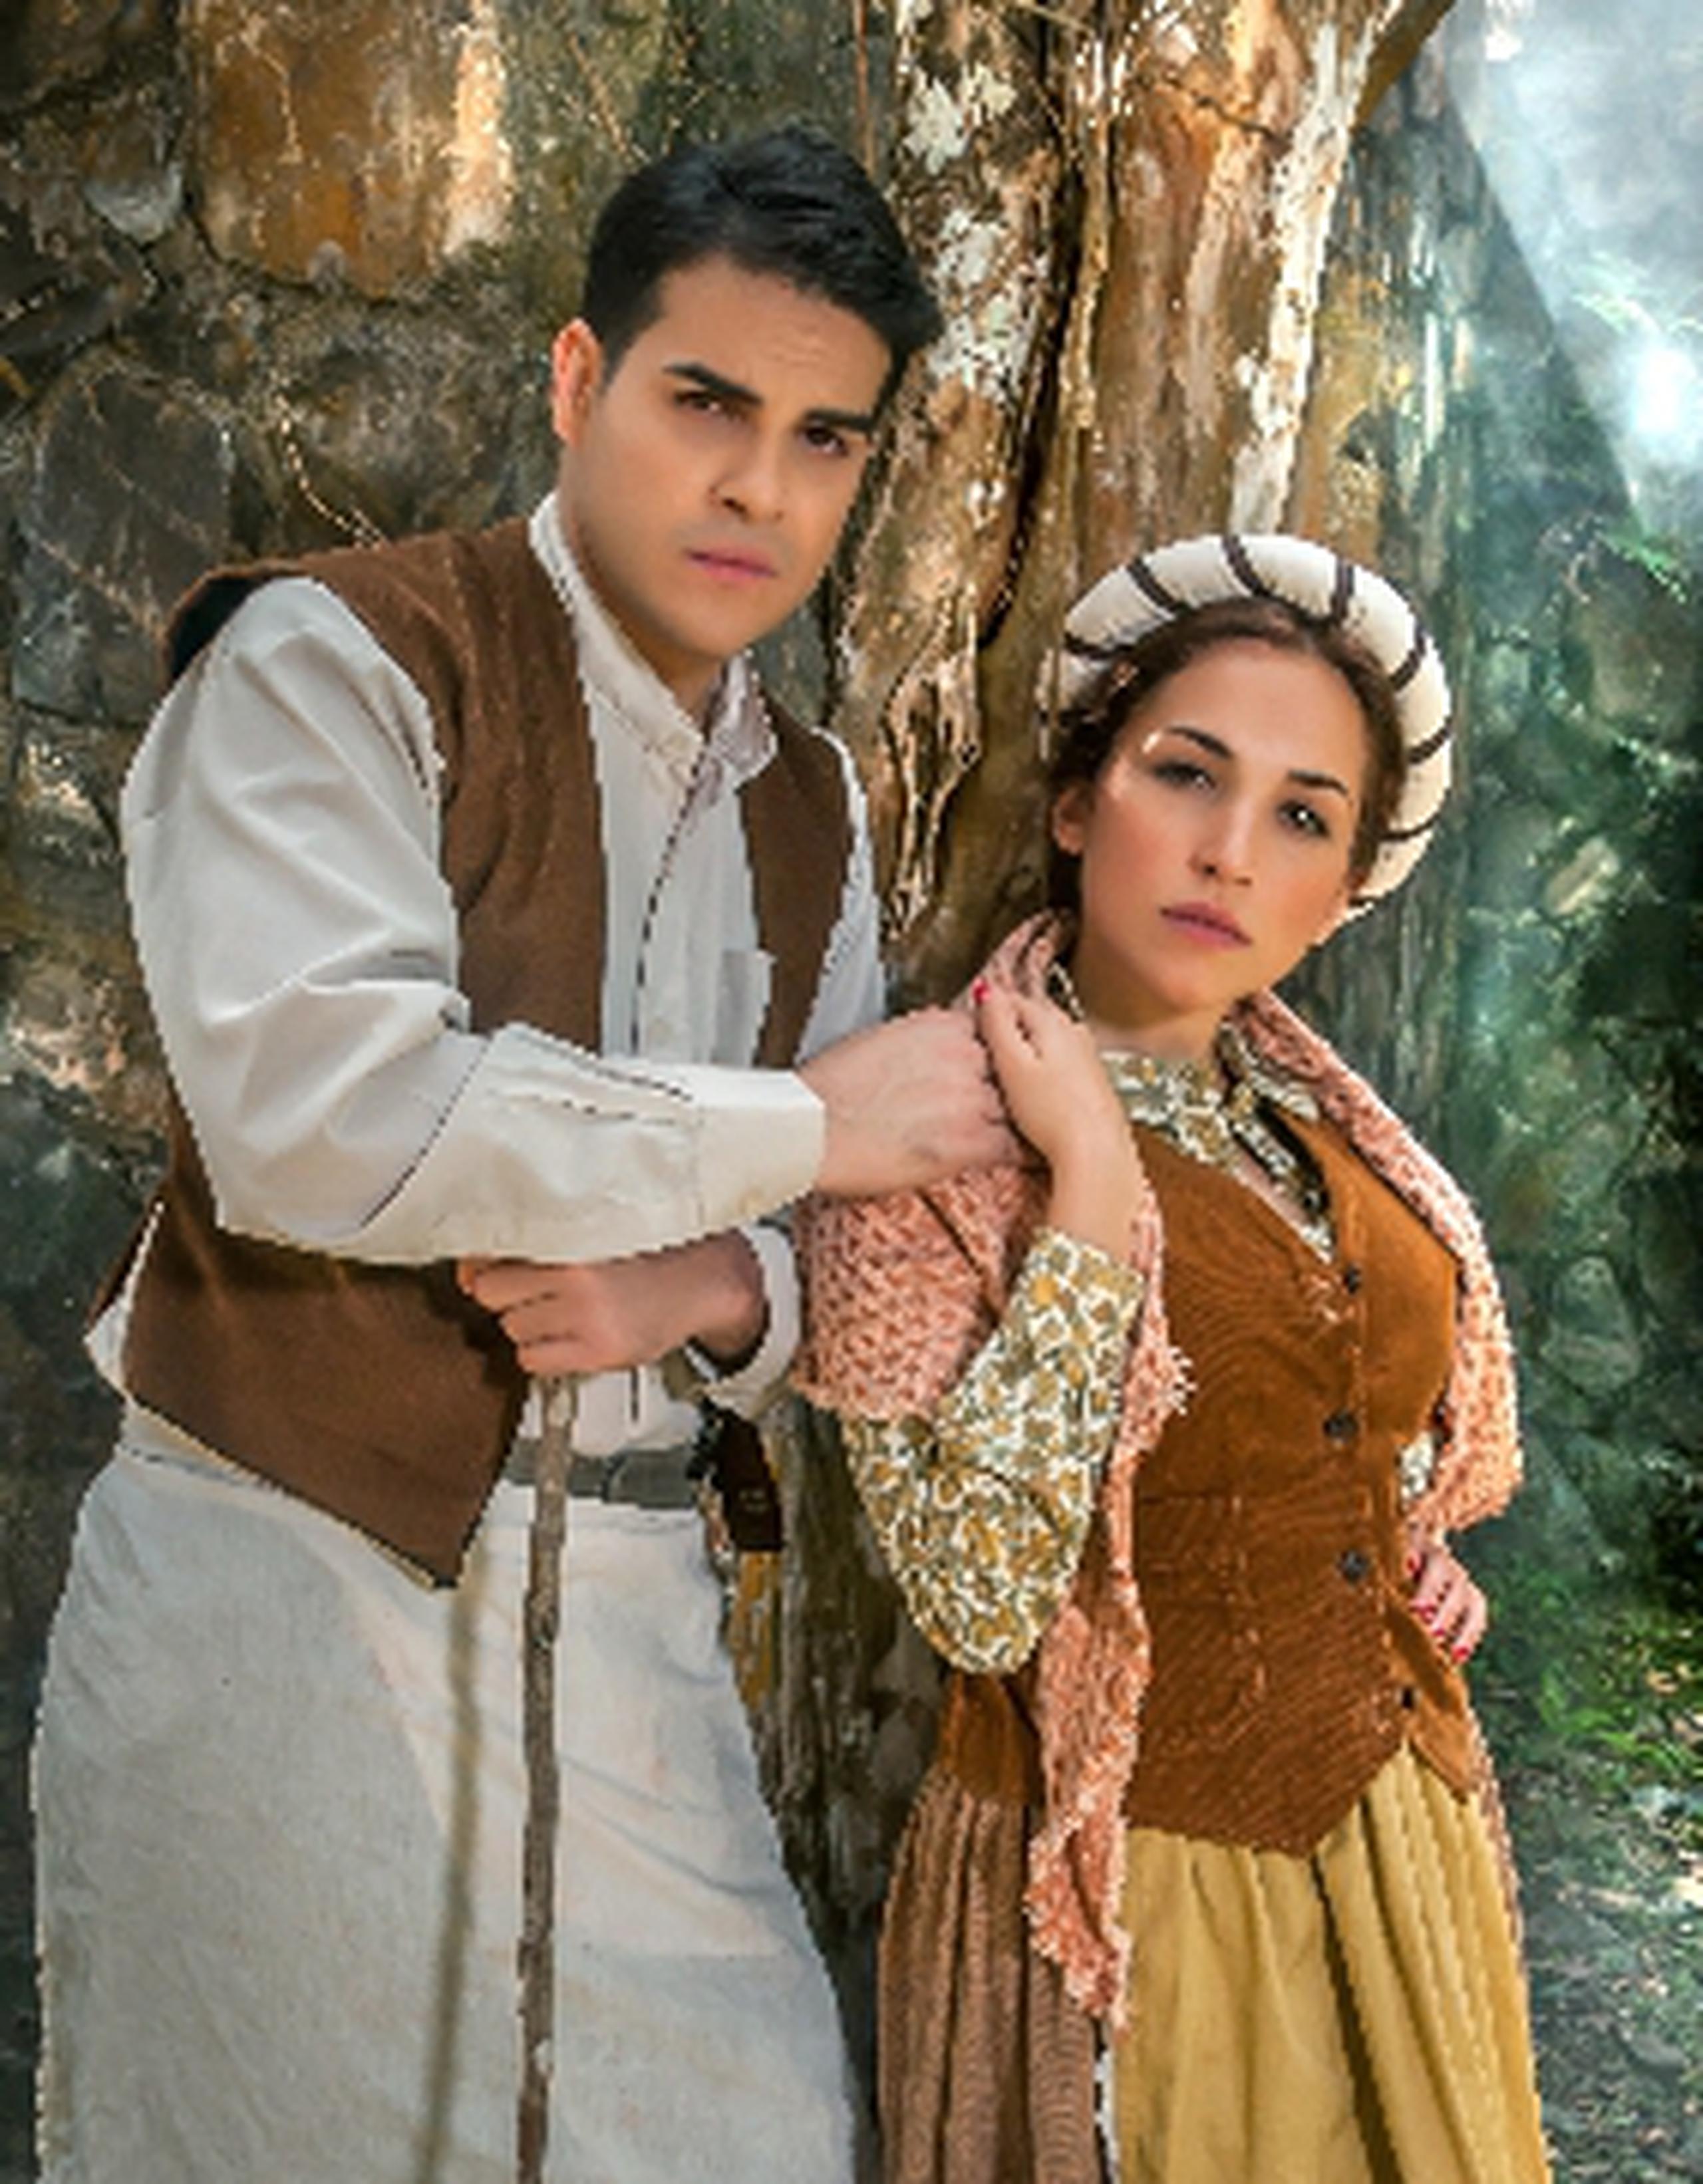  Ana Isabelle comparte roles estelares con Víctor Santiago en el musical Dentro del bosque.&nbsp;<font color="yellow">(Suministrada)</font>